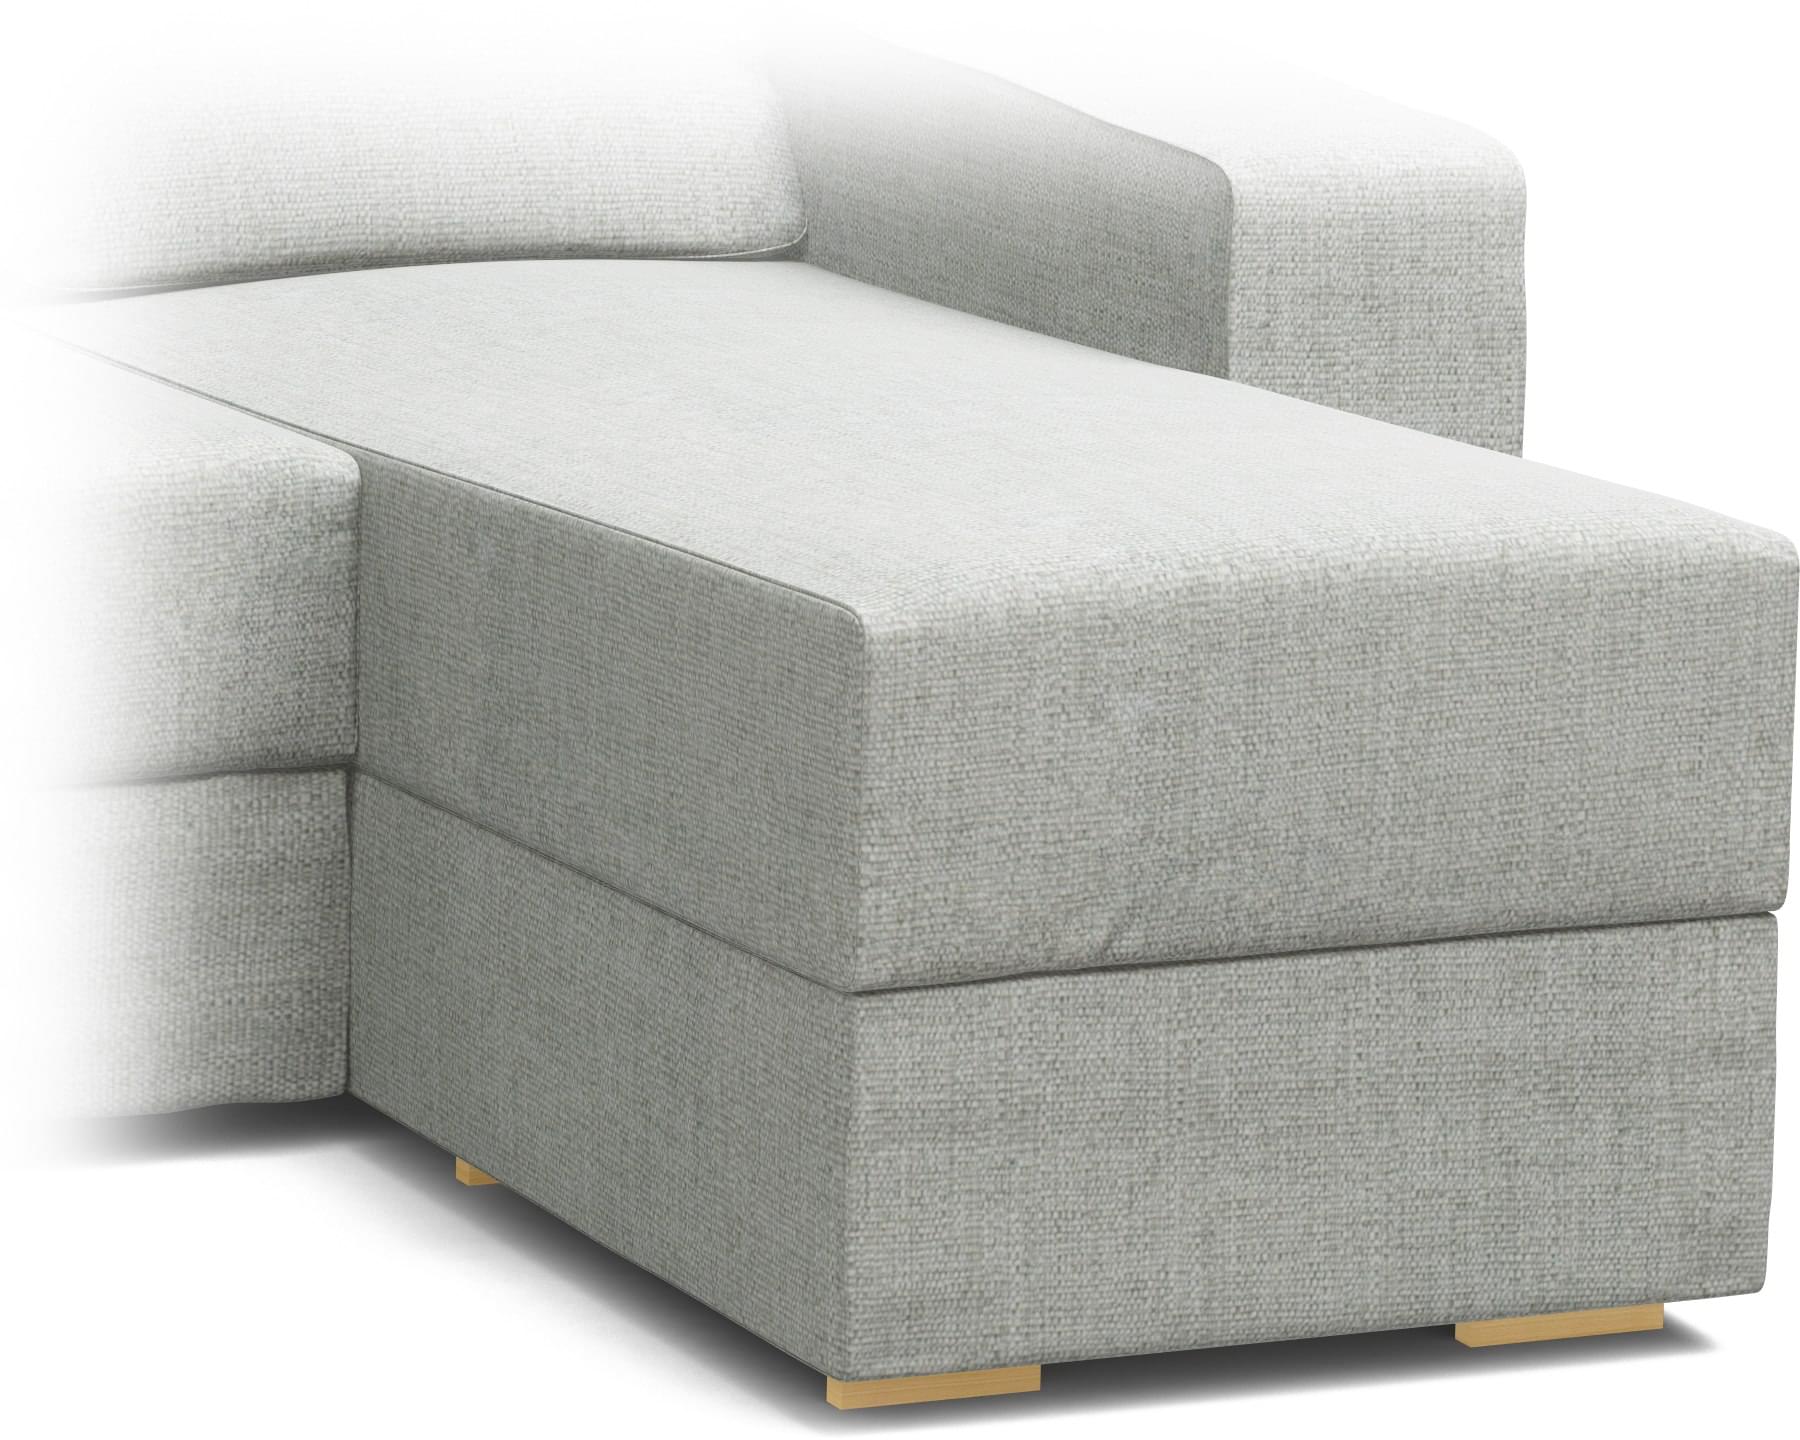 customise your corner sofa